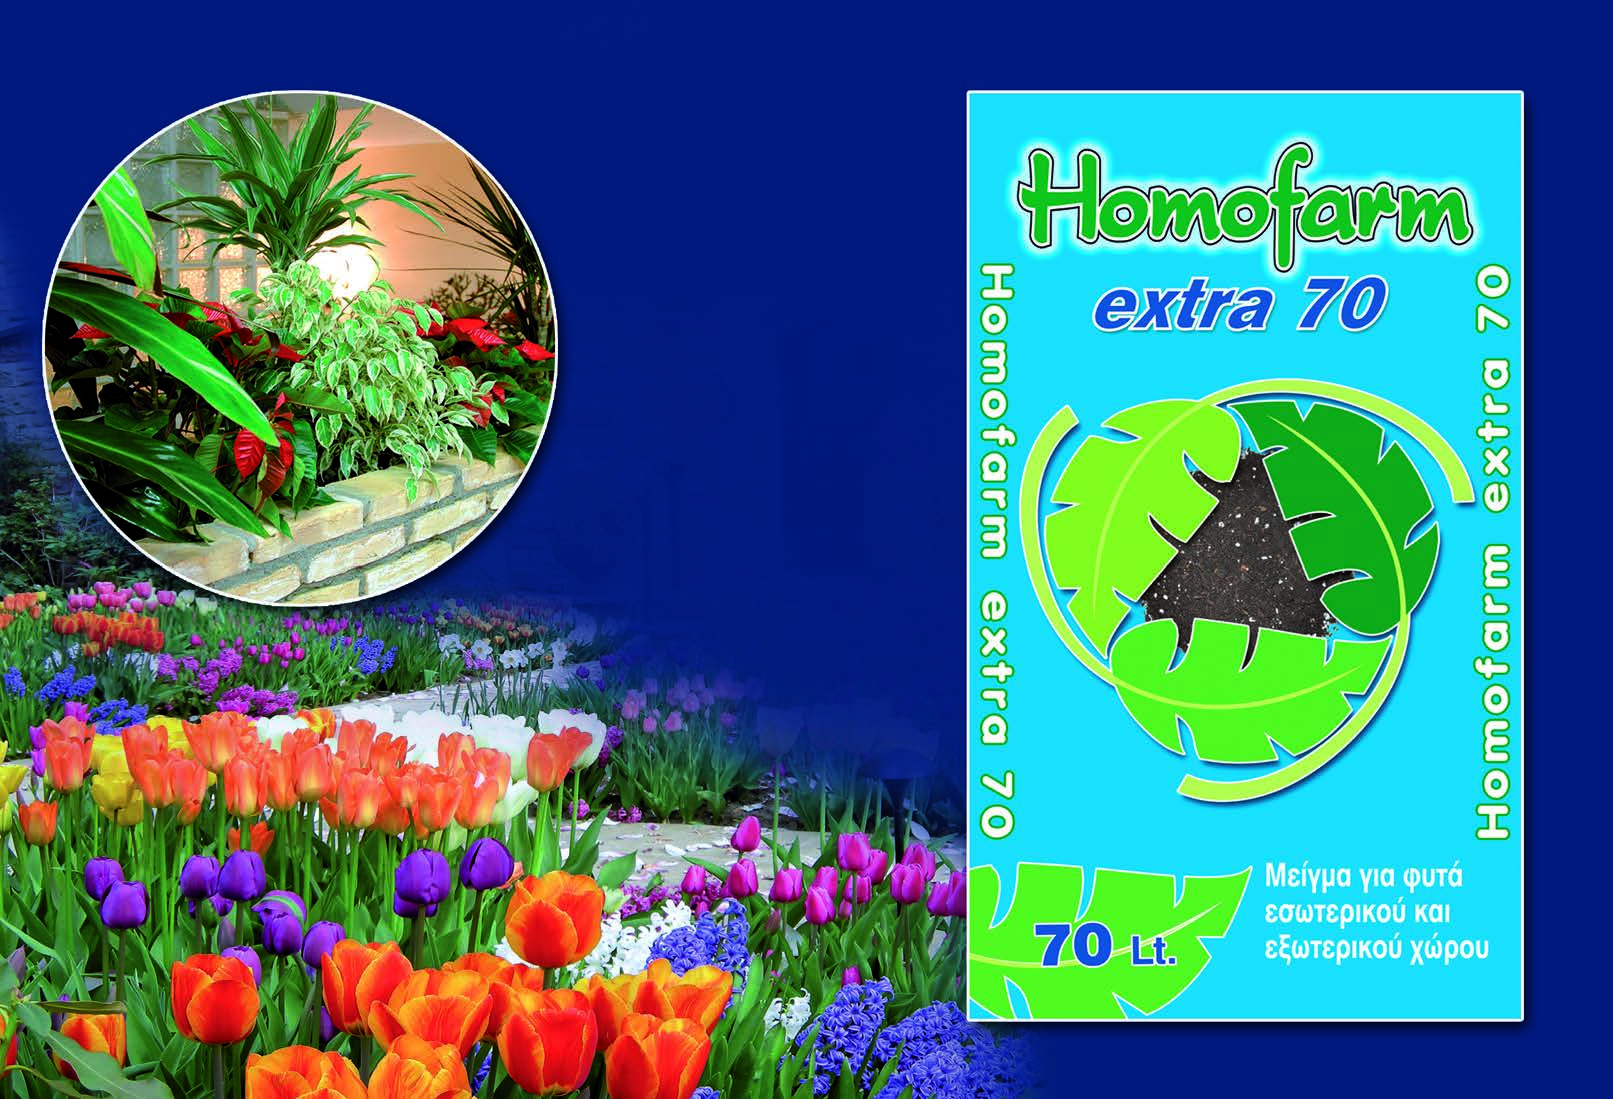 HOMOFARM EXTRA 70-70 lt. Ελαφρύ μείγμα χώματος για φυτά EΣΩTEPIKOY και EΞΩTEPIKOY χώρου.